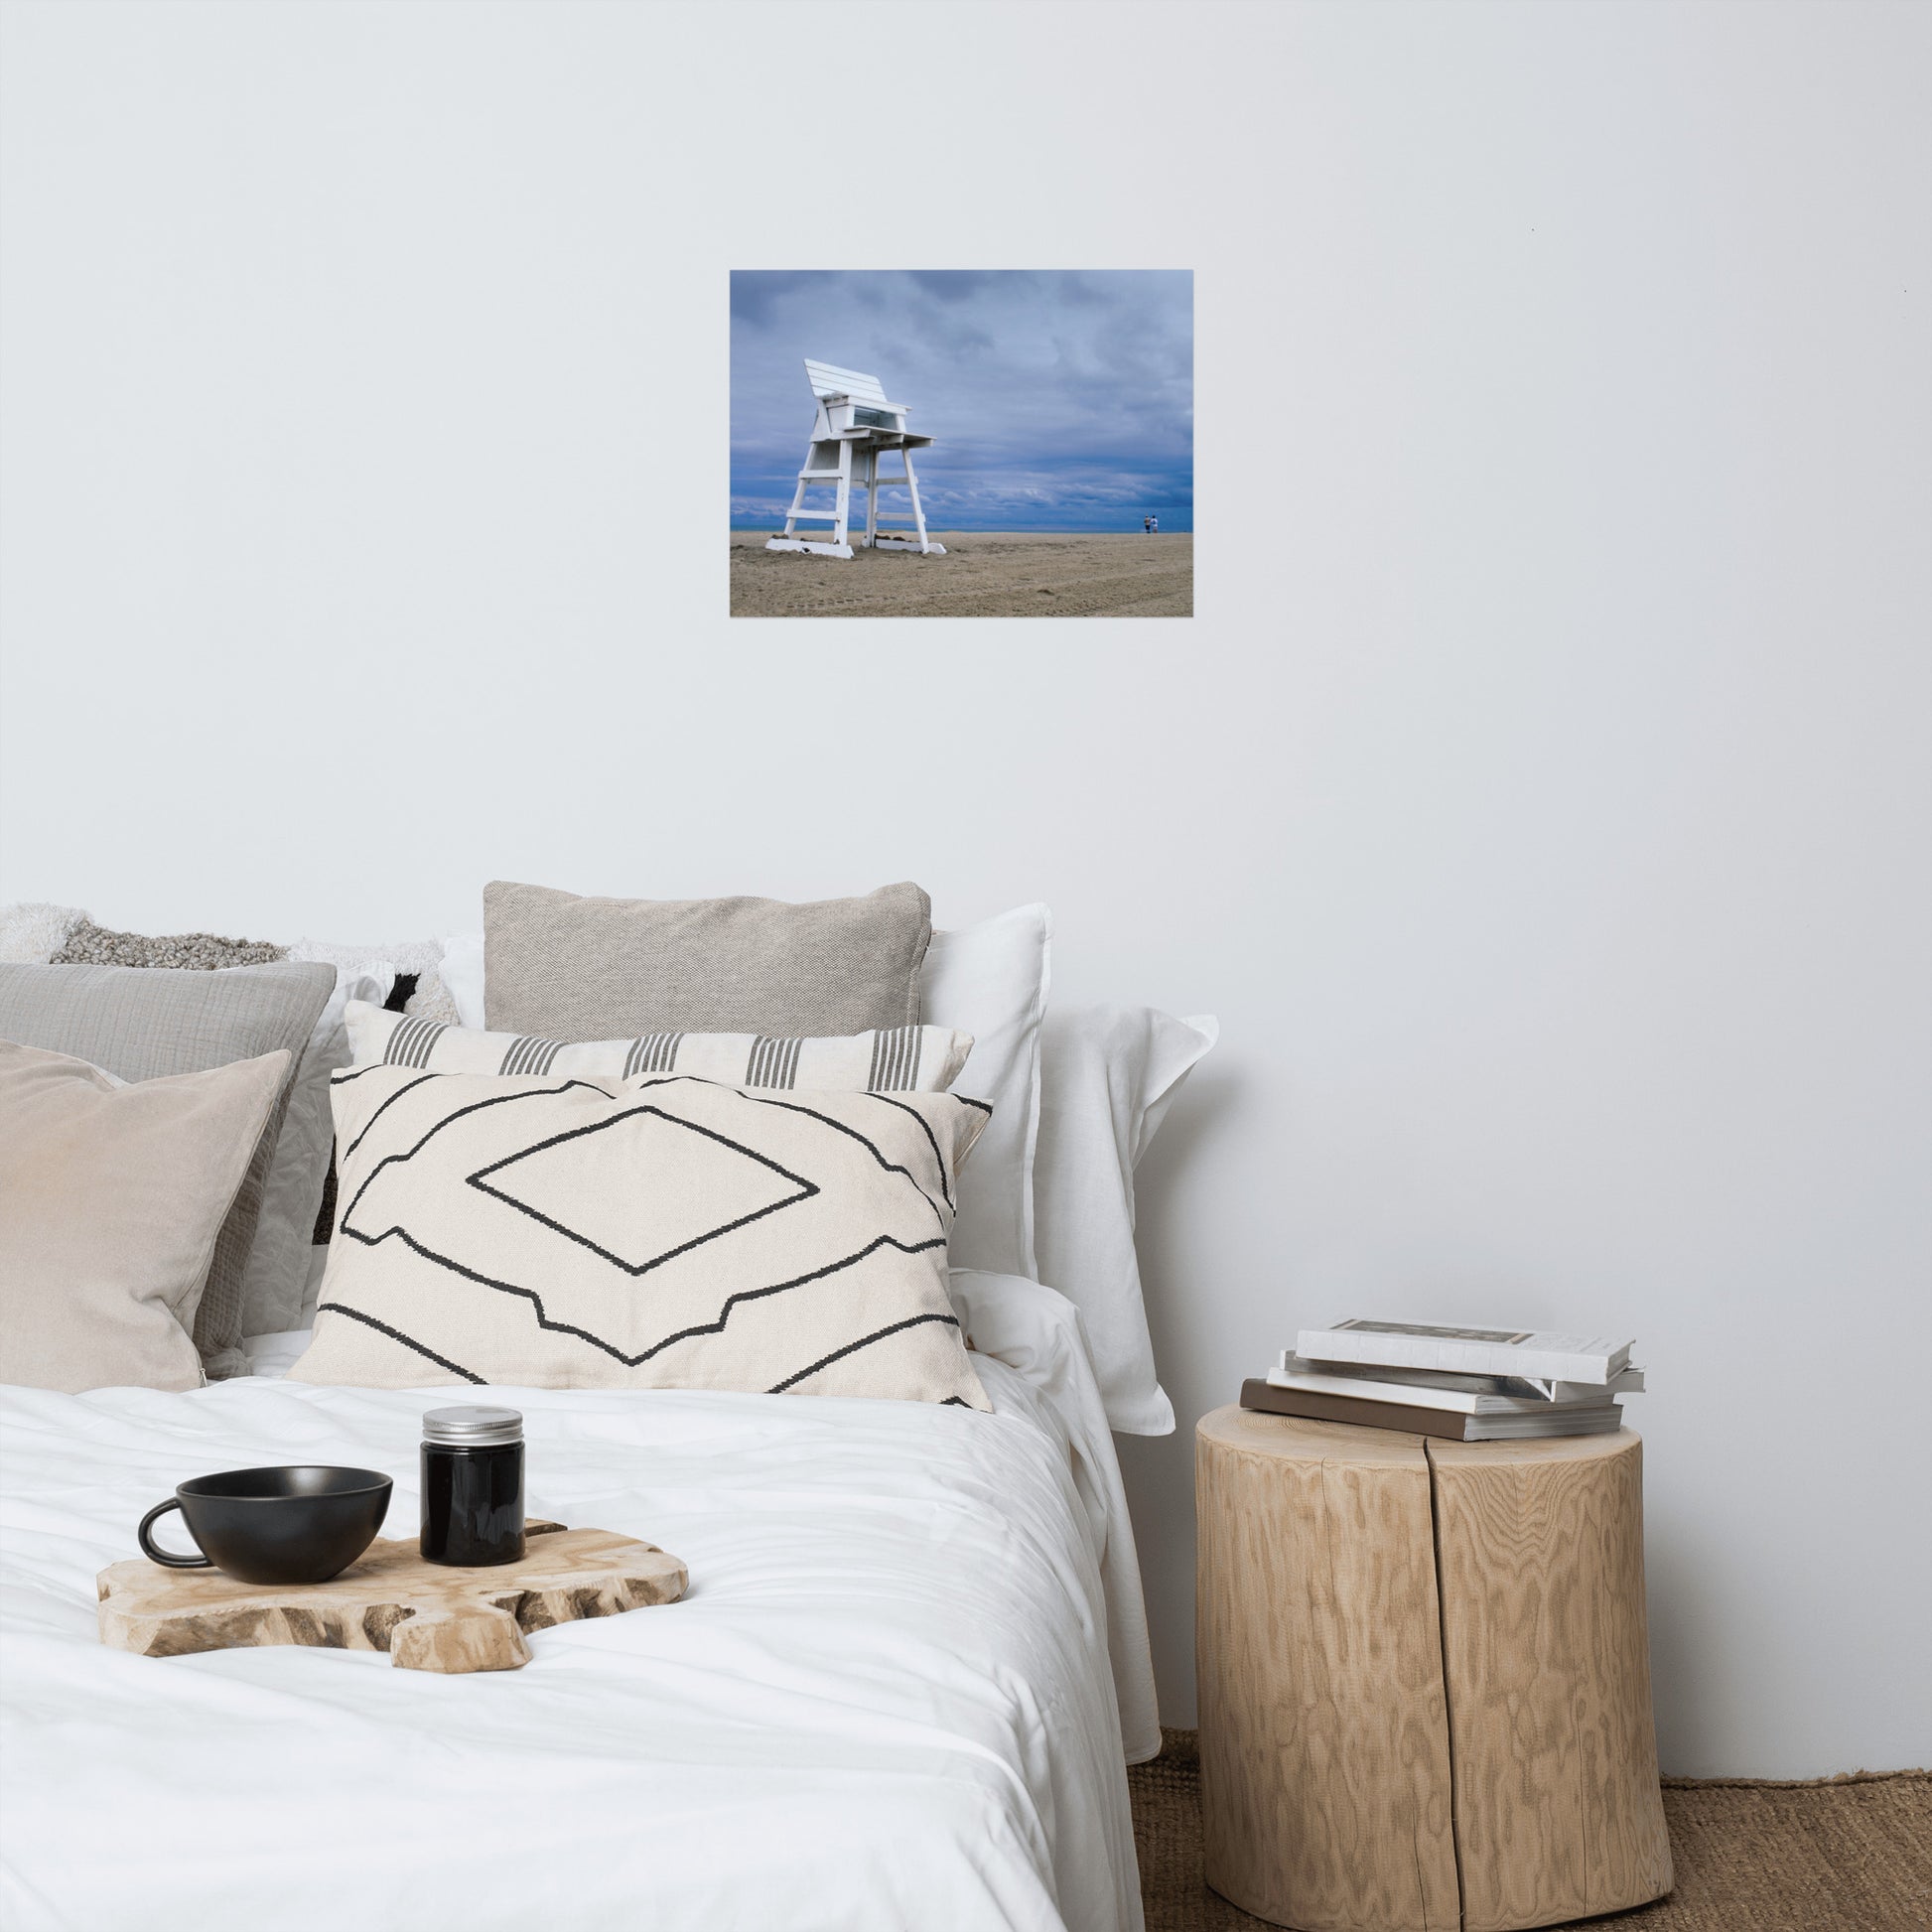 Bedroom Above Bed Wall Art: Stormy Skies - Beach / Coastal / Seascape Nature / Landscape Photograph Loose / Unframed Wall Art Print - Artwork